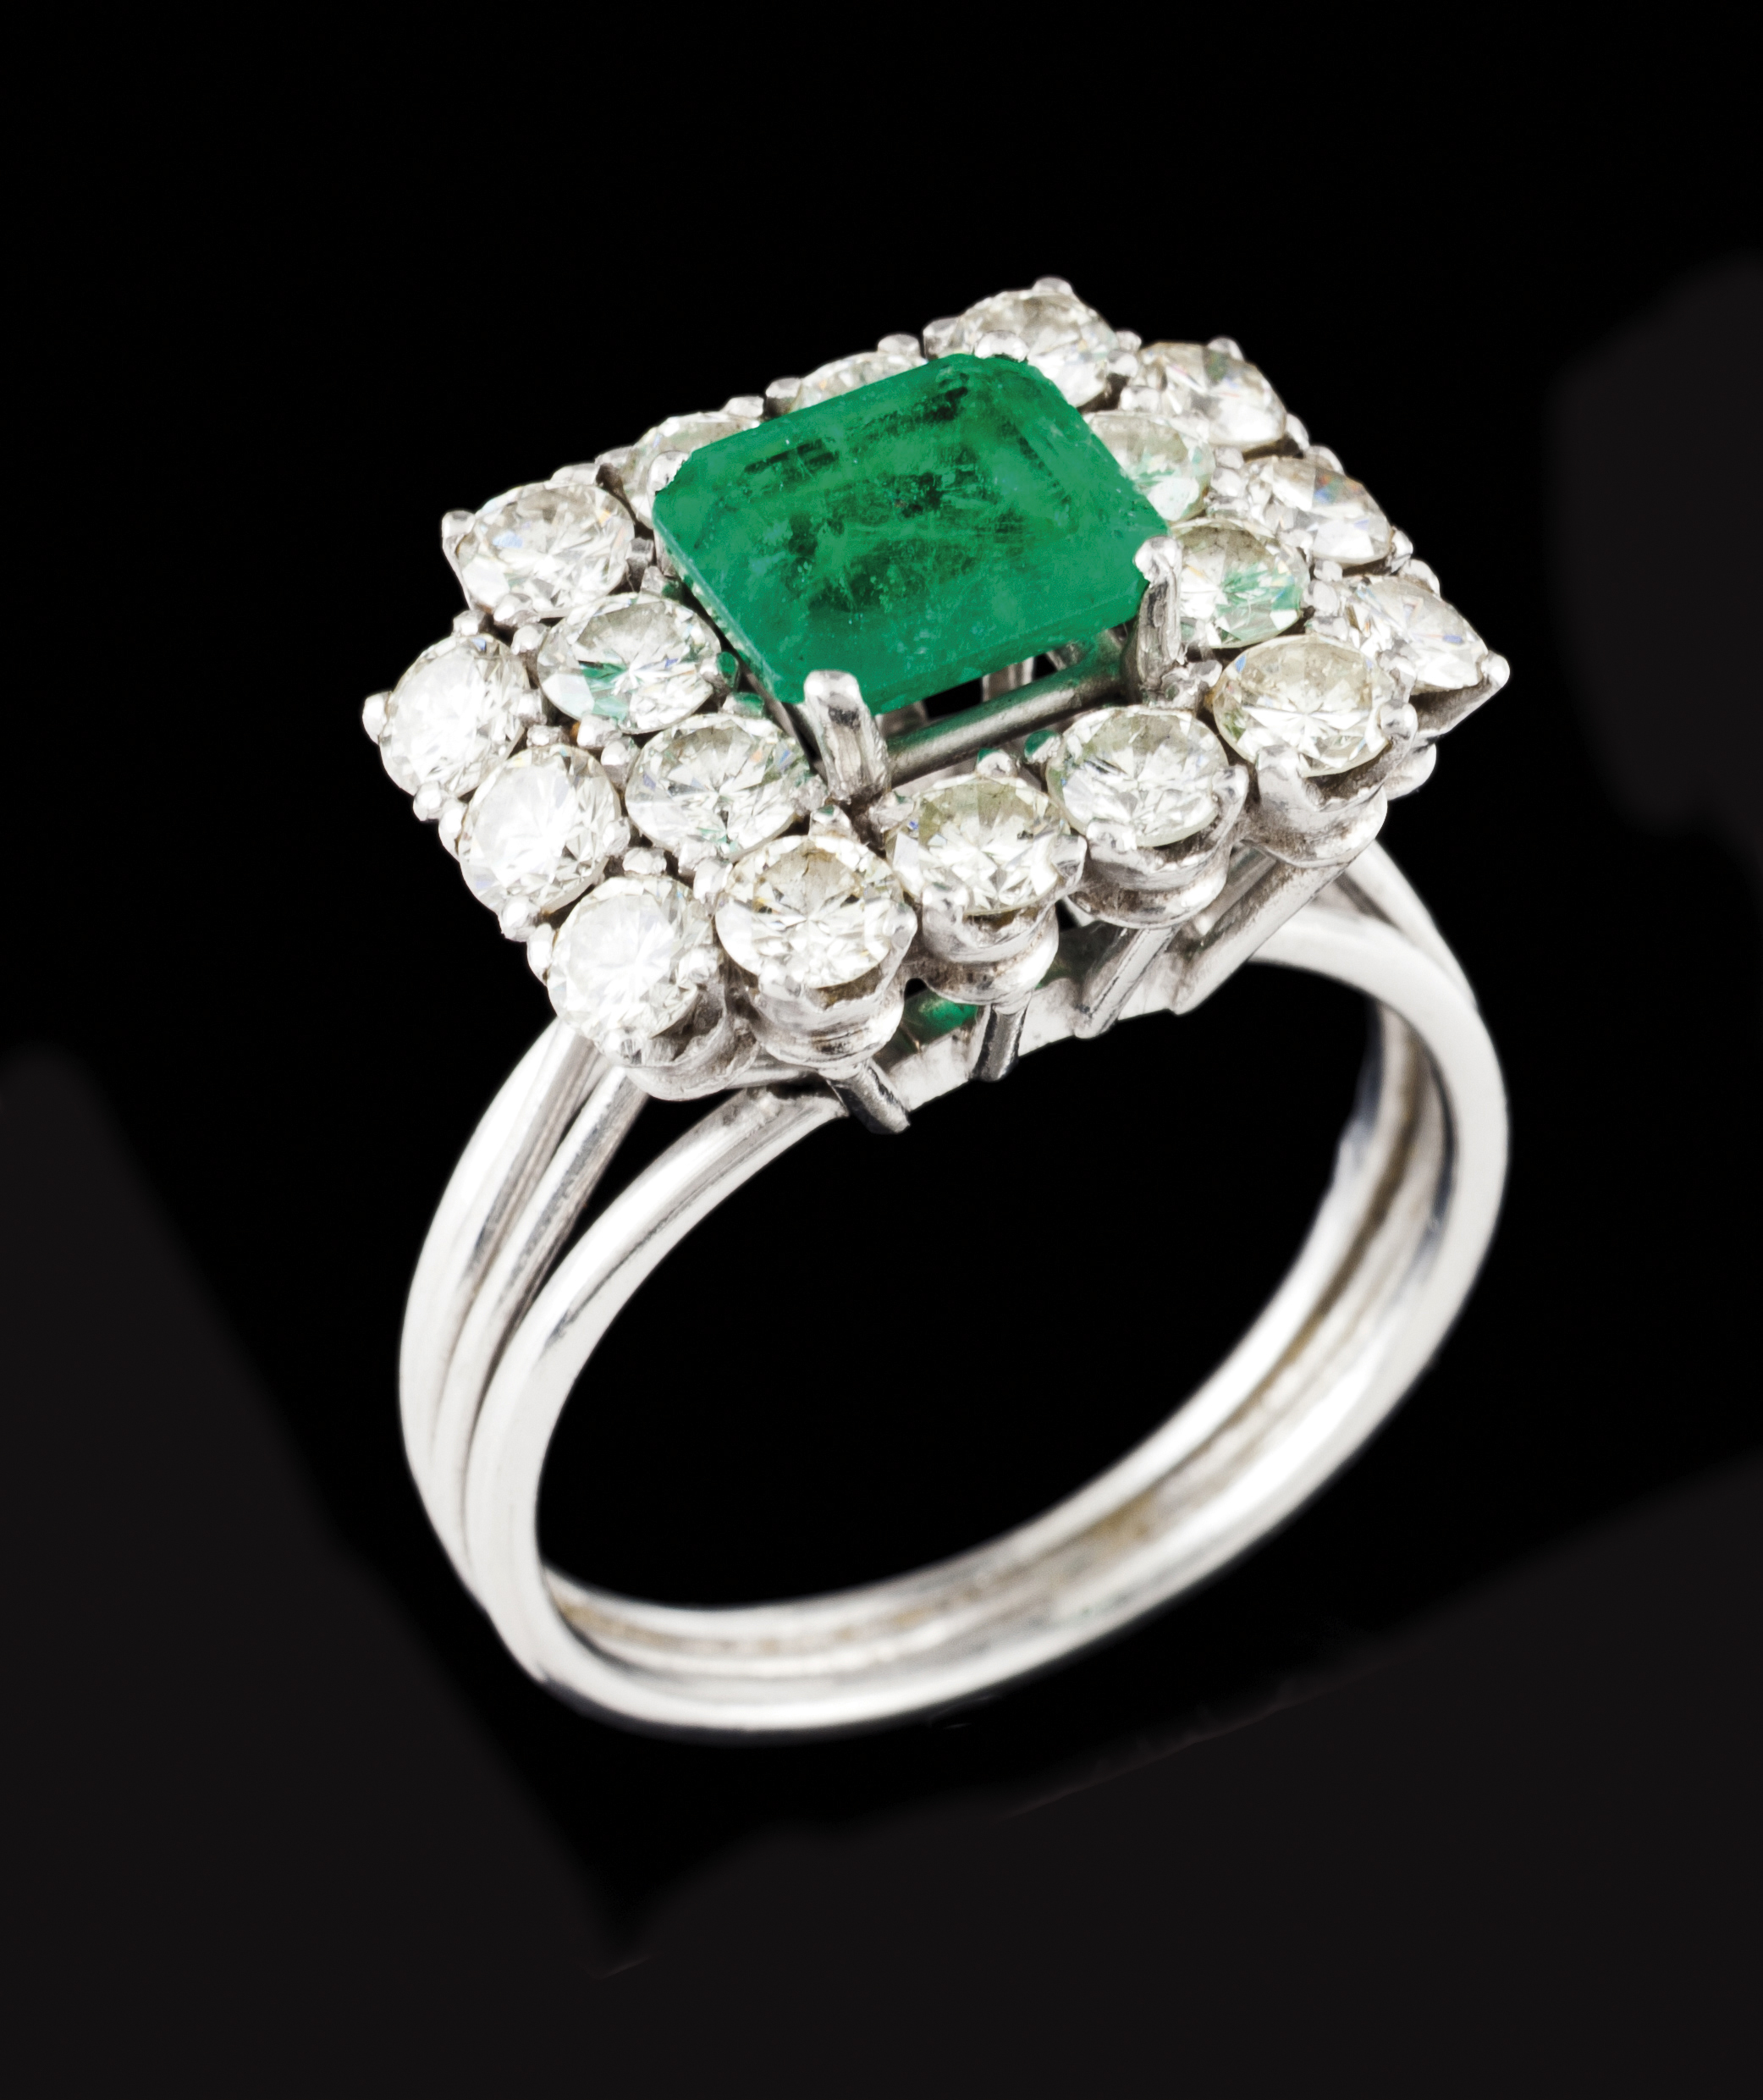 A ringPlatinum Set with one emerald cut emerald (ca. 0.85) and 18 brilliant cut diamonds